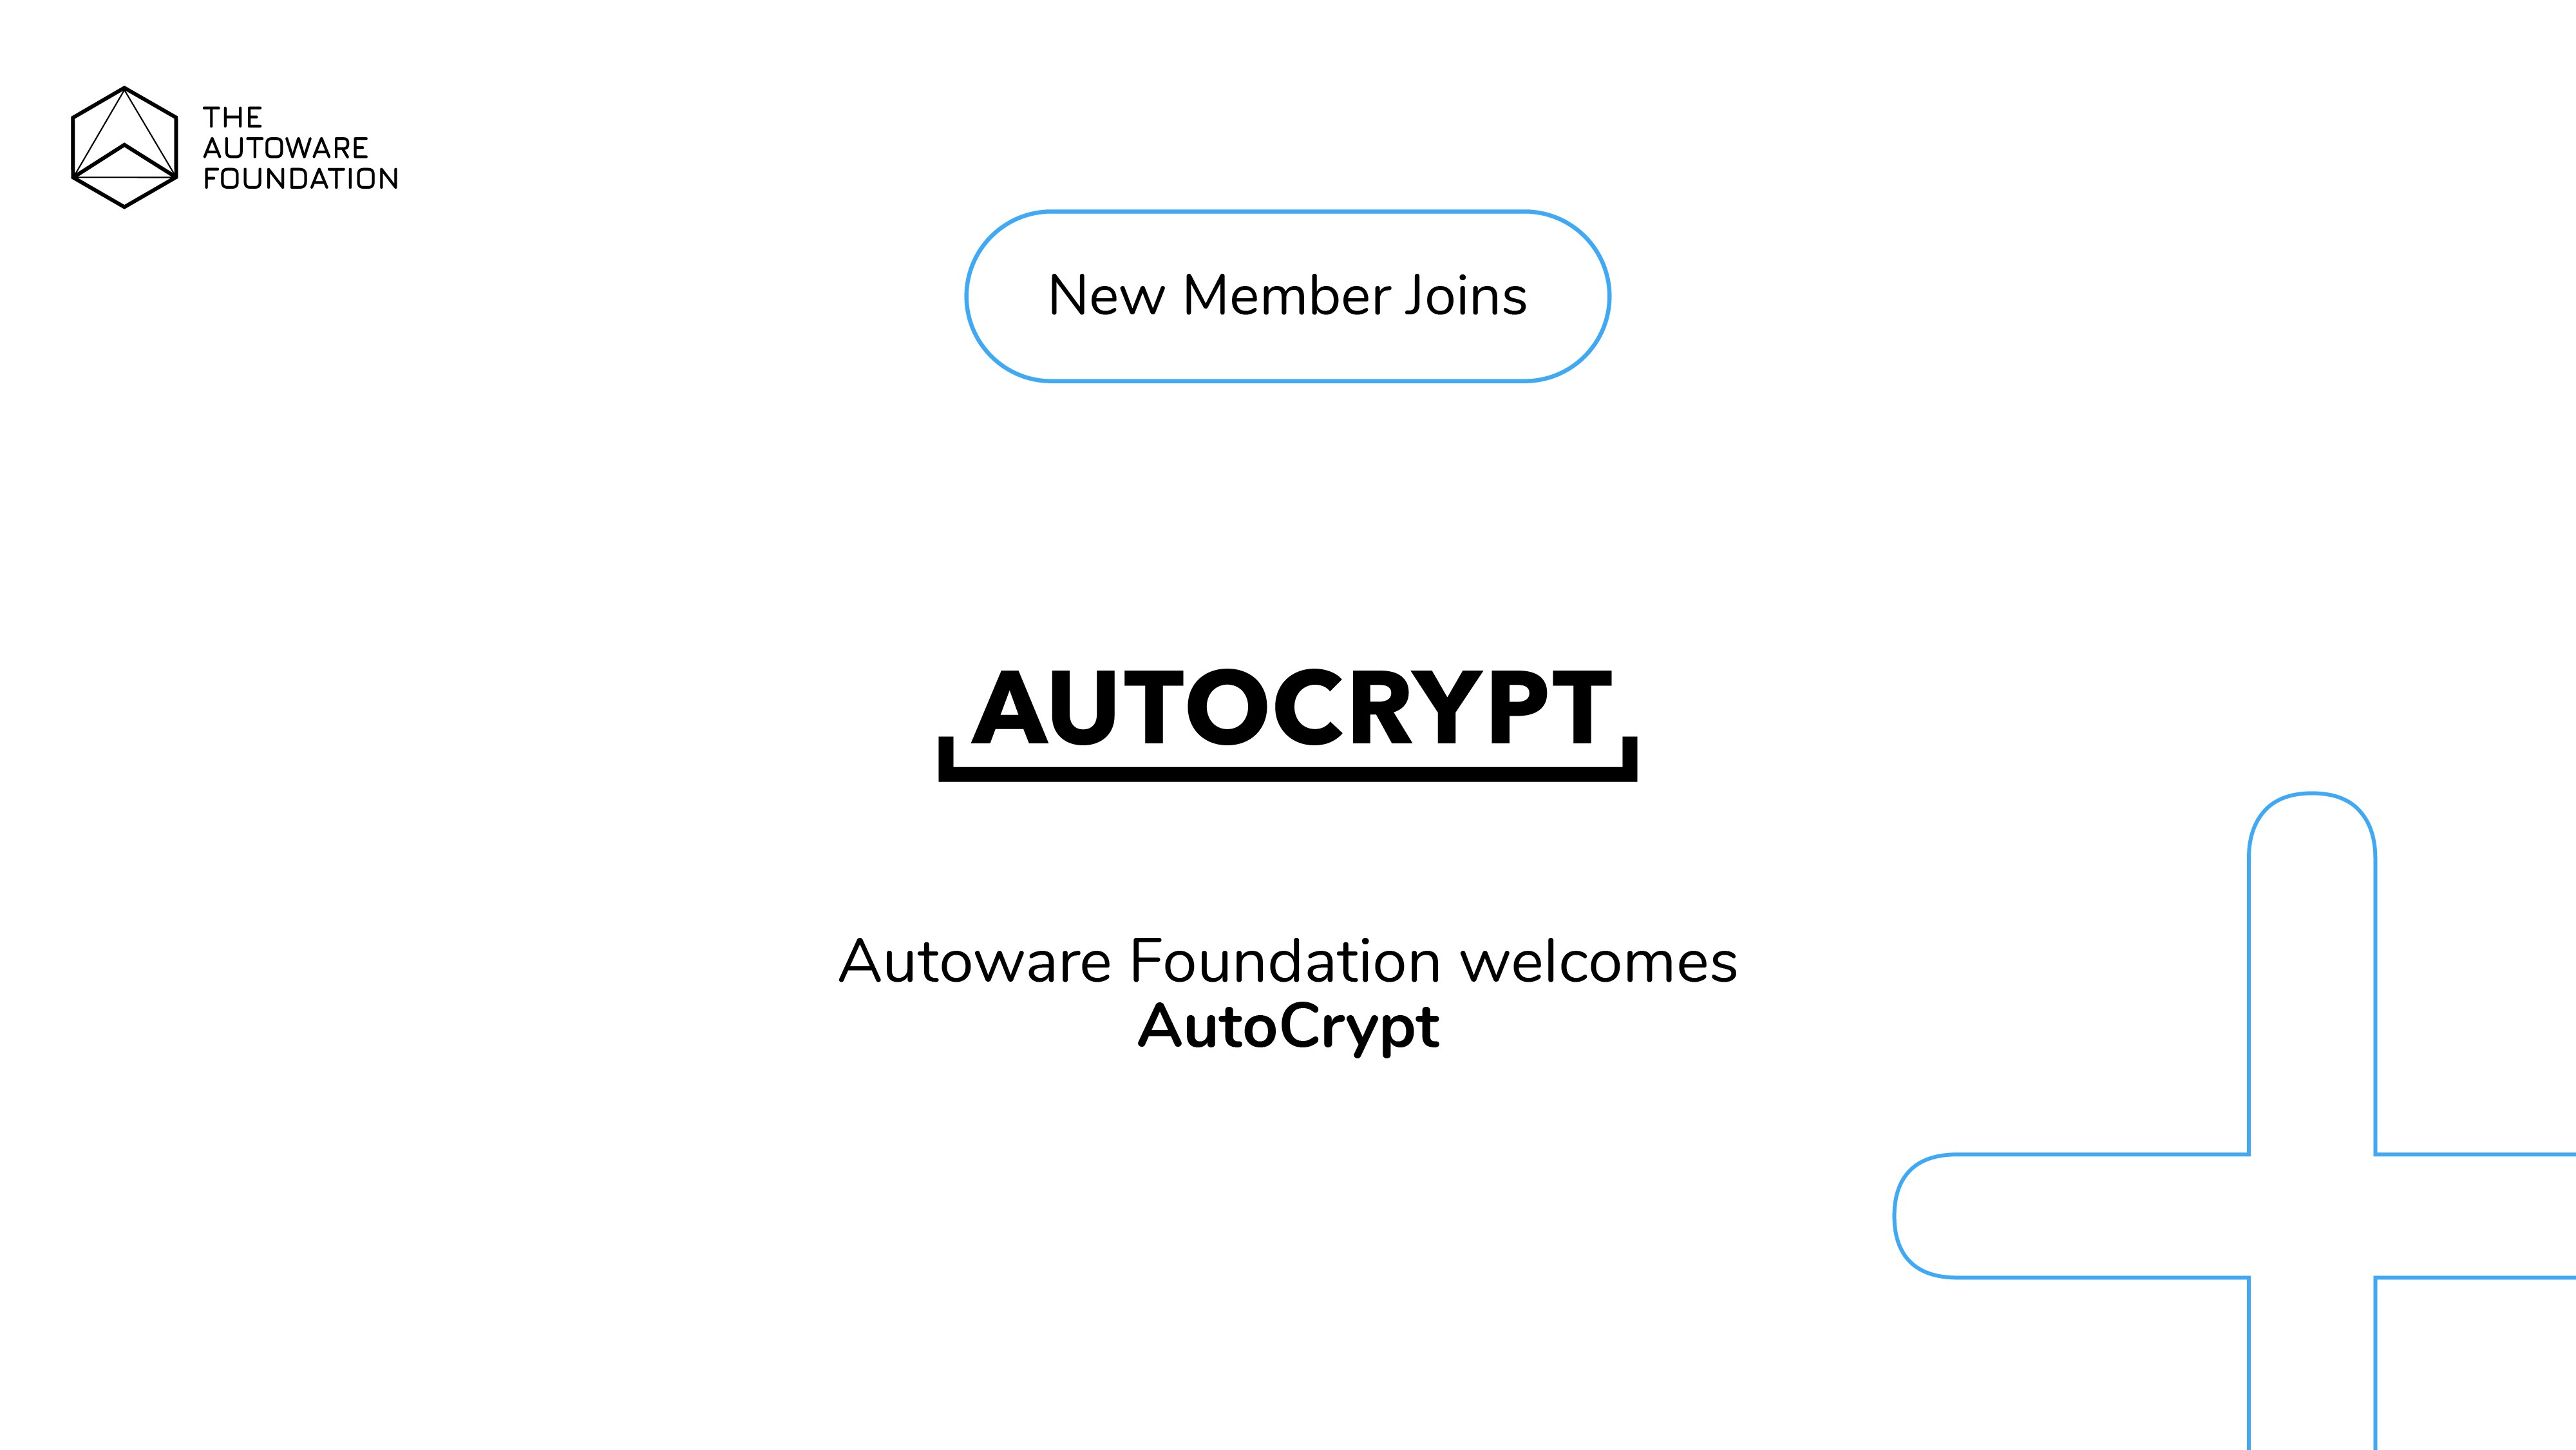 AutoCrypt joins the Autoware Foundation!